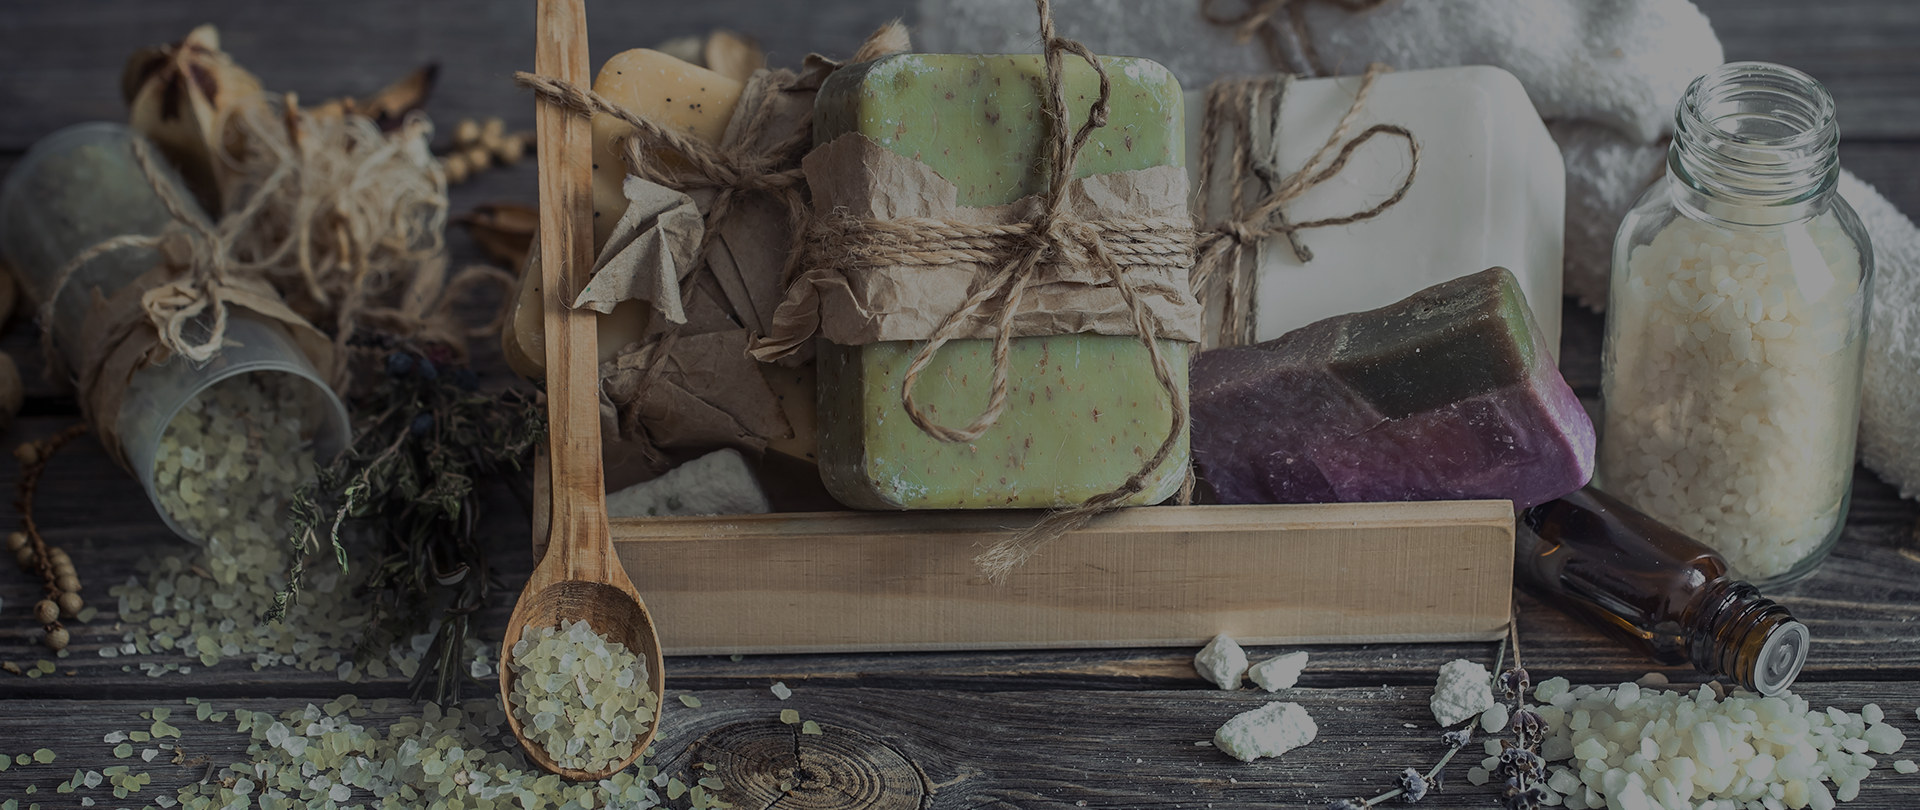 Natural Handmade Soap Bars with Natural Ingredients 